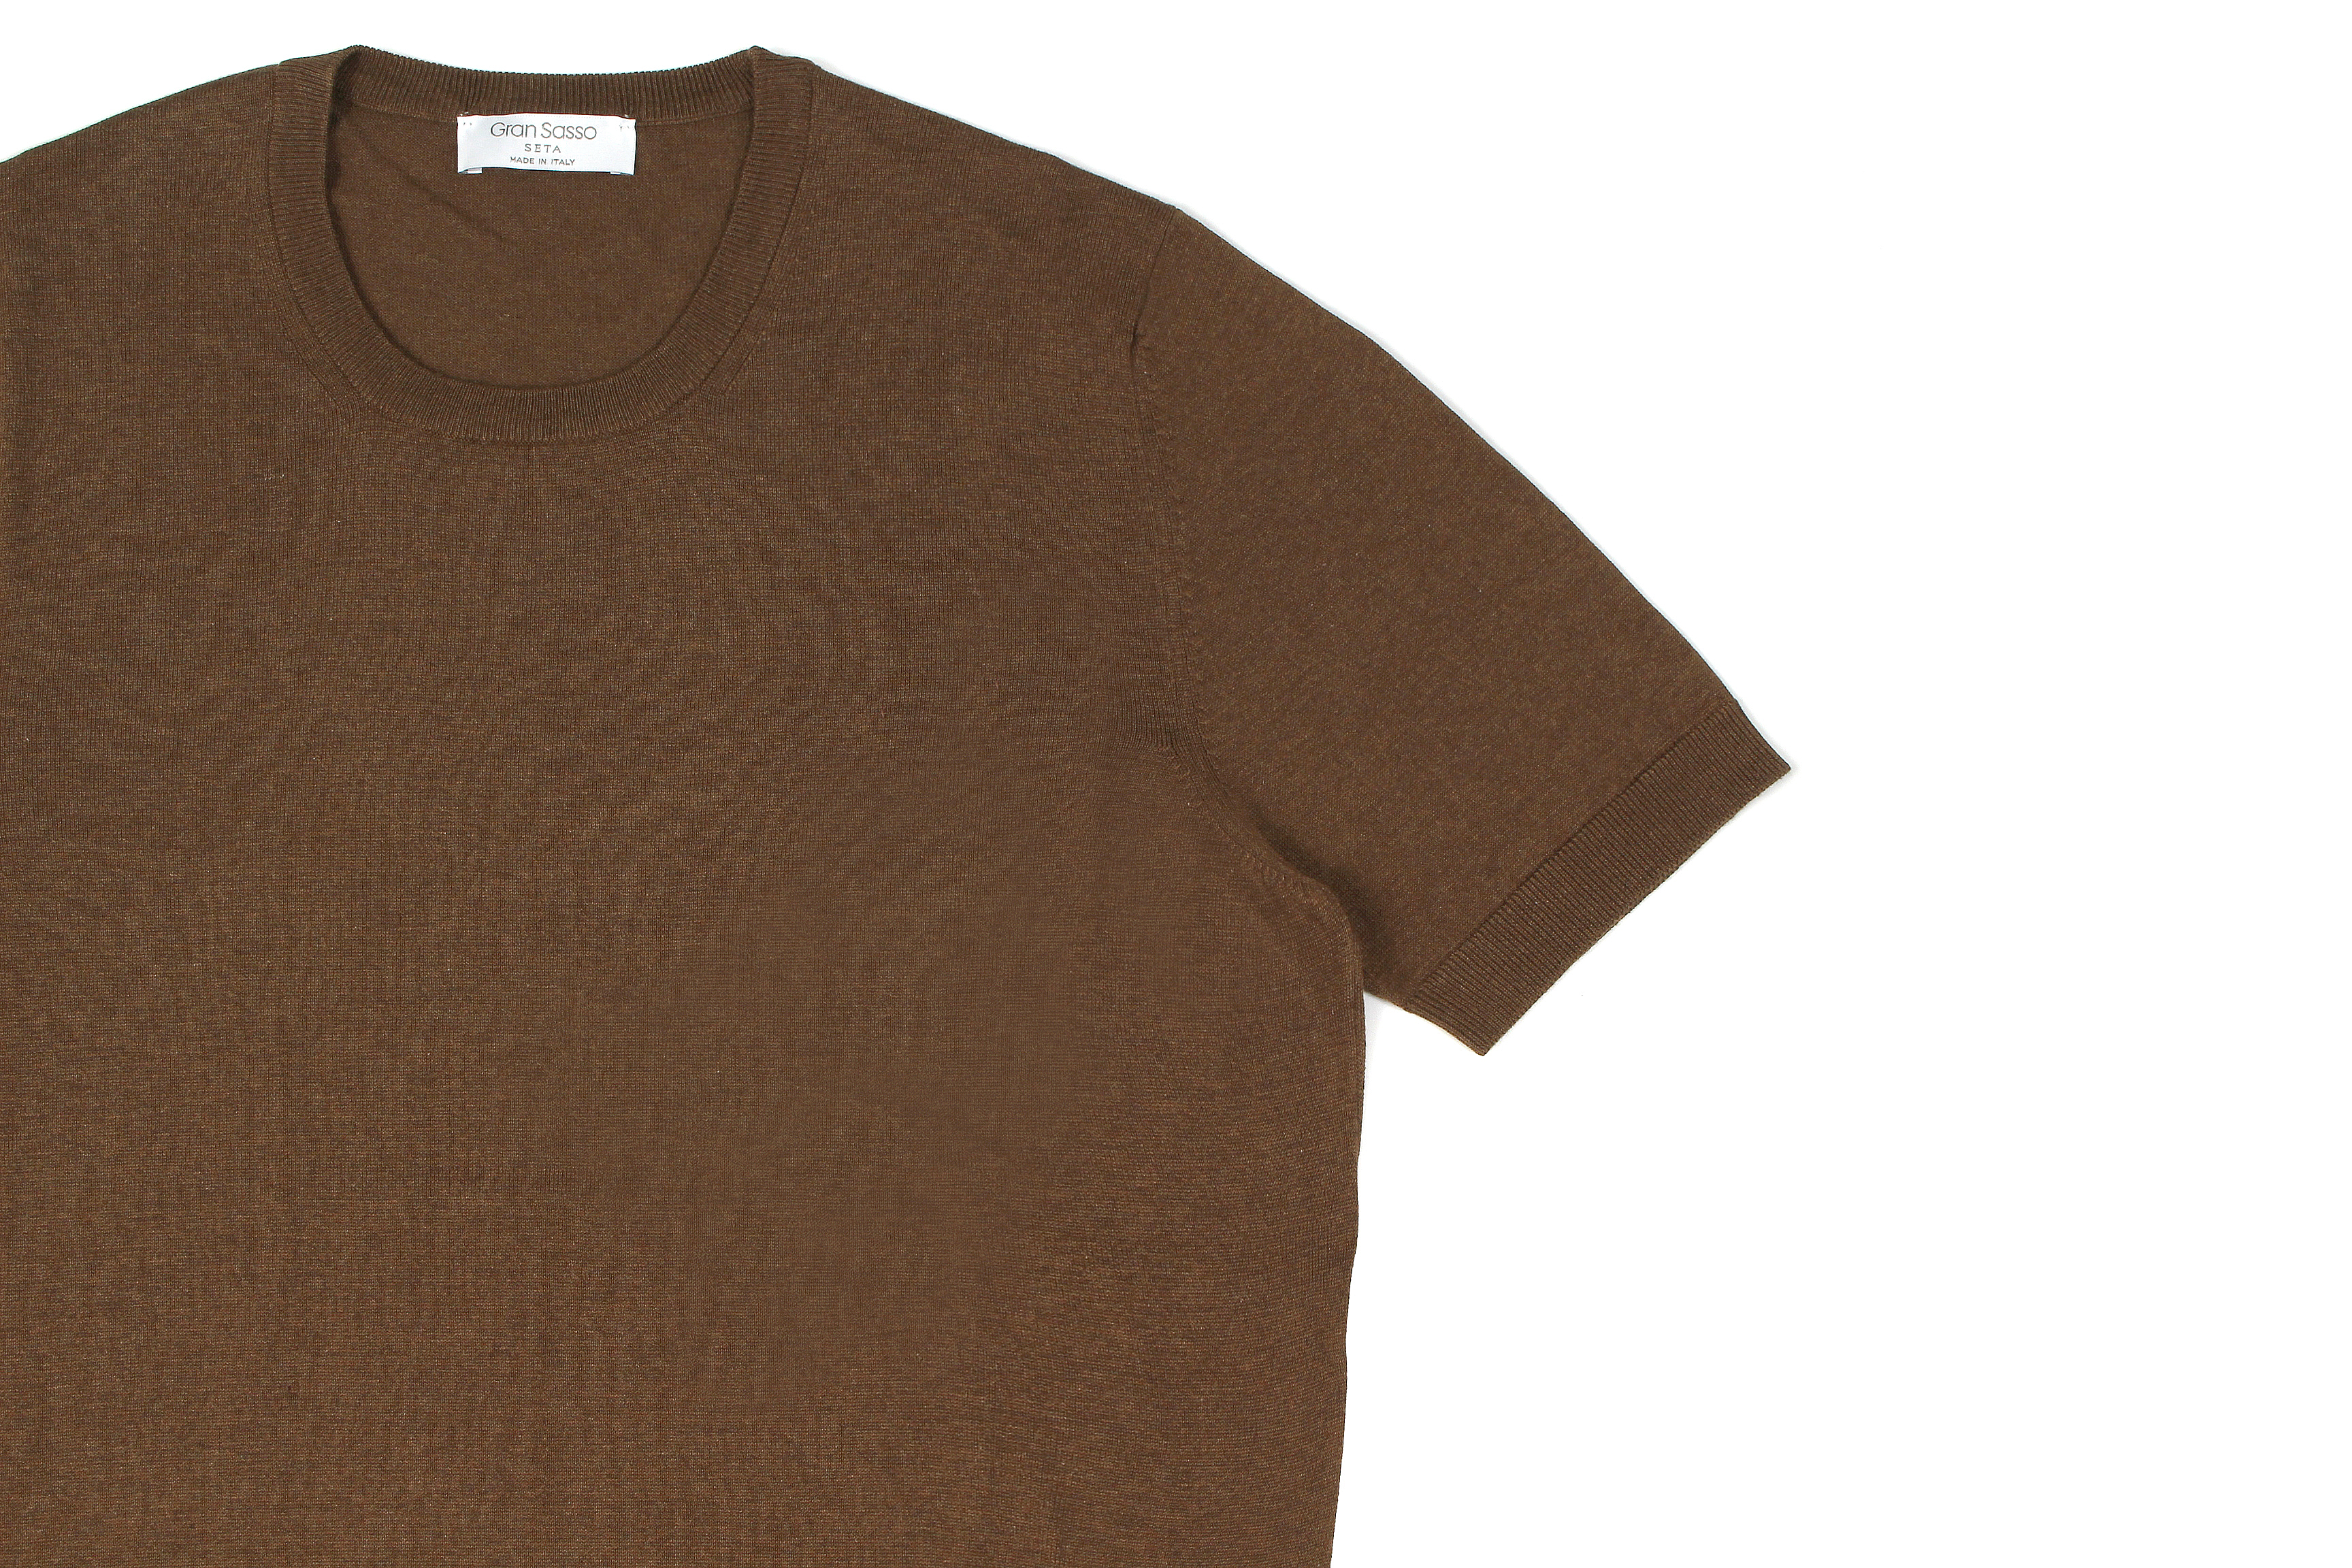 Gran Sasso (グランサッソ) Silk Knit T-shirt (シルクニット Tシャツ) SETA (シルク 100%) ショートスリーブ シルク ニット Tシャツ GOLD (ゴールド・170)　made in italy (イタリア製) 2020 春夏新作 gransasso 愛知 名古屋 altoediritto アルトエデリット